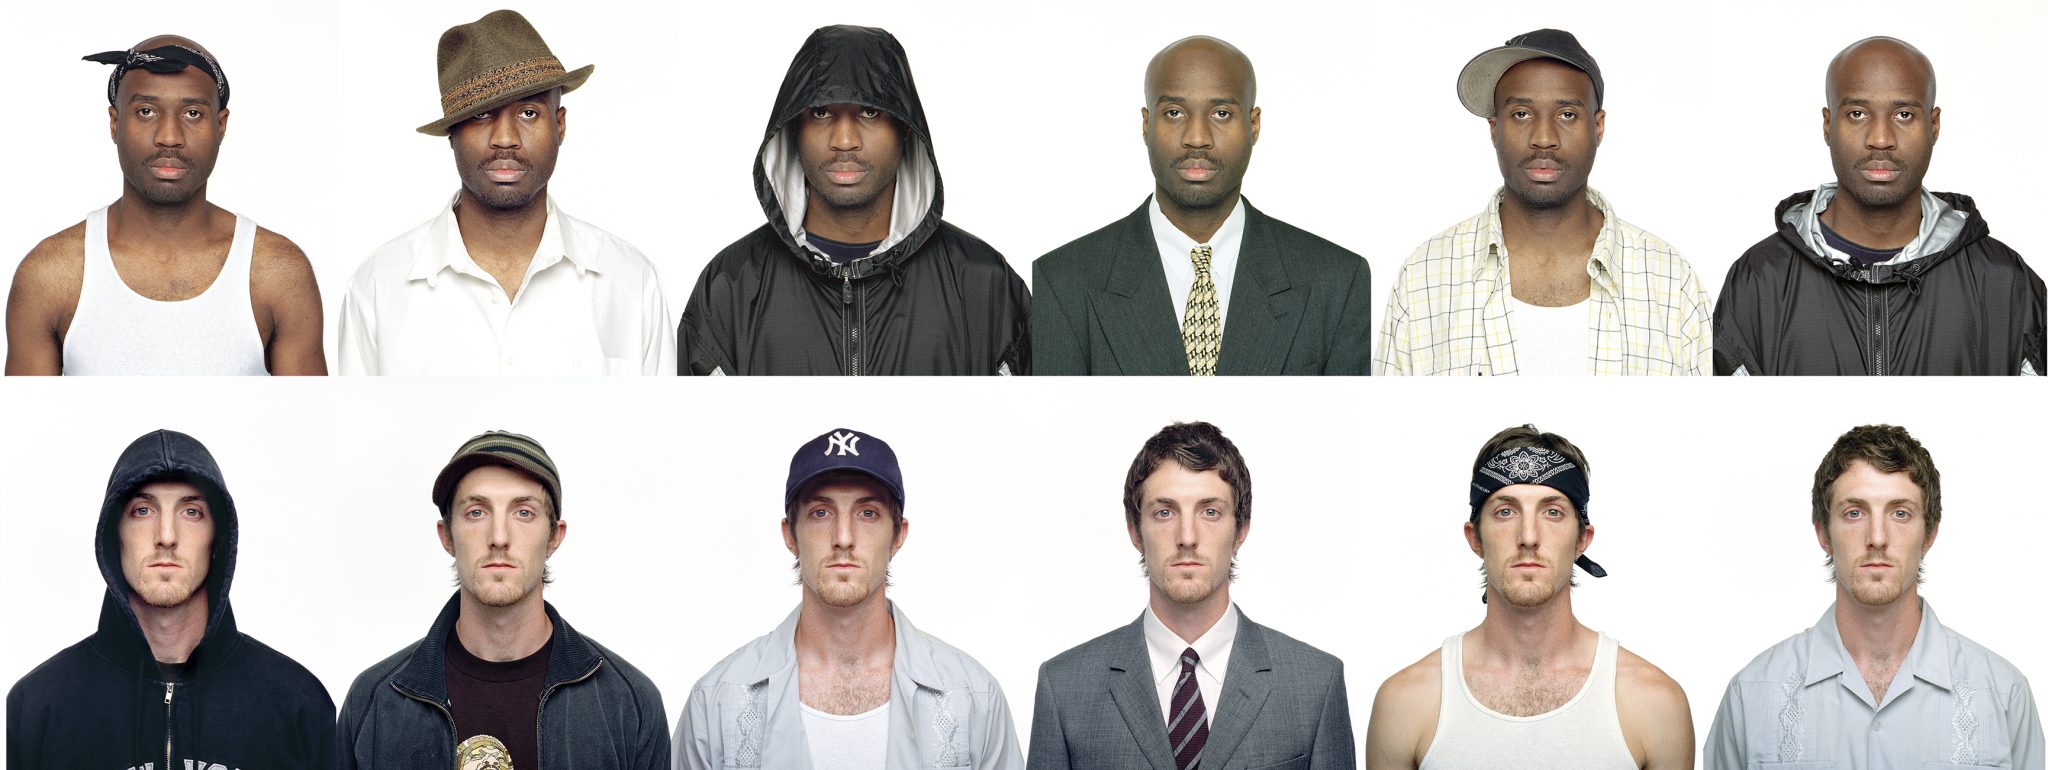 Photo of black versus white men in various types of dress